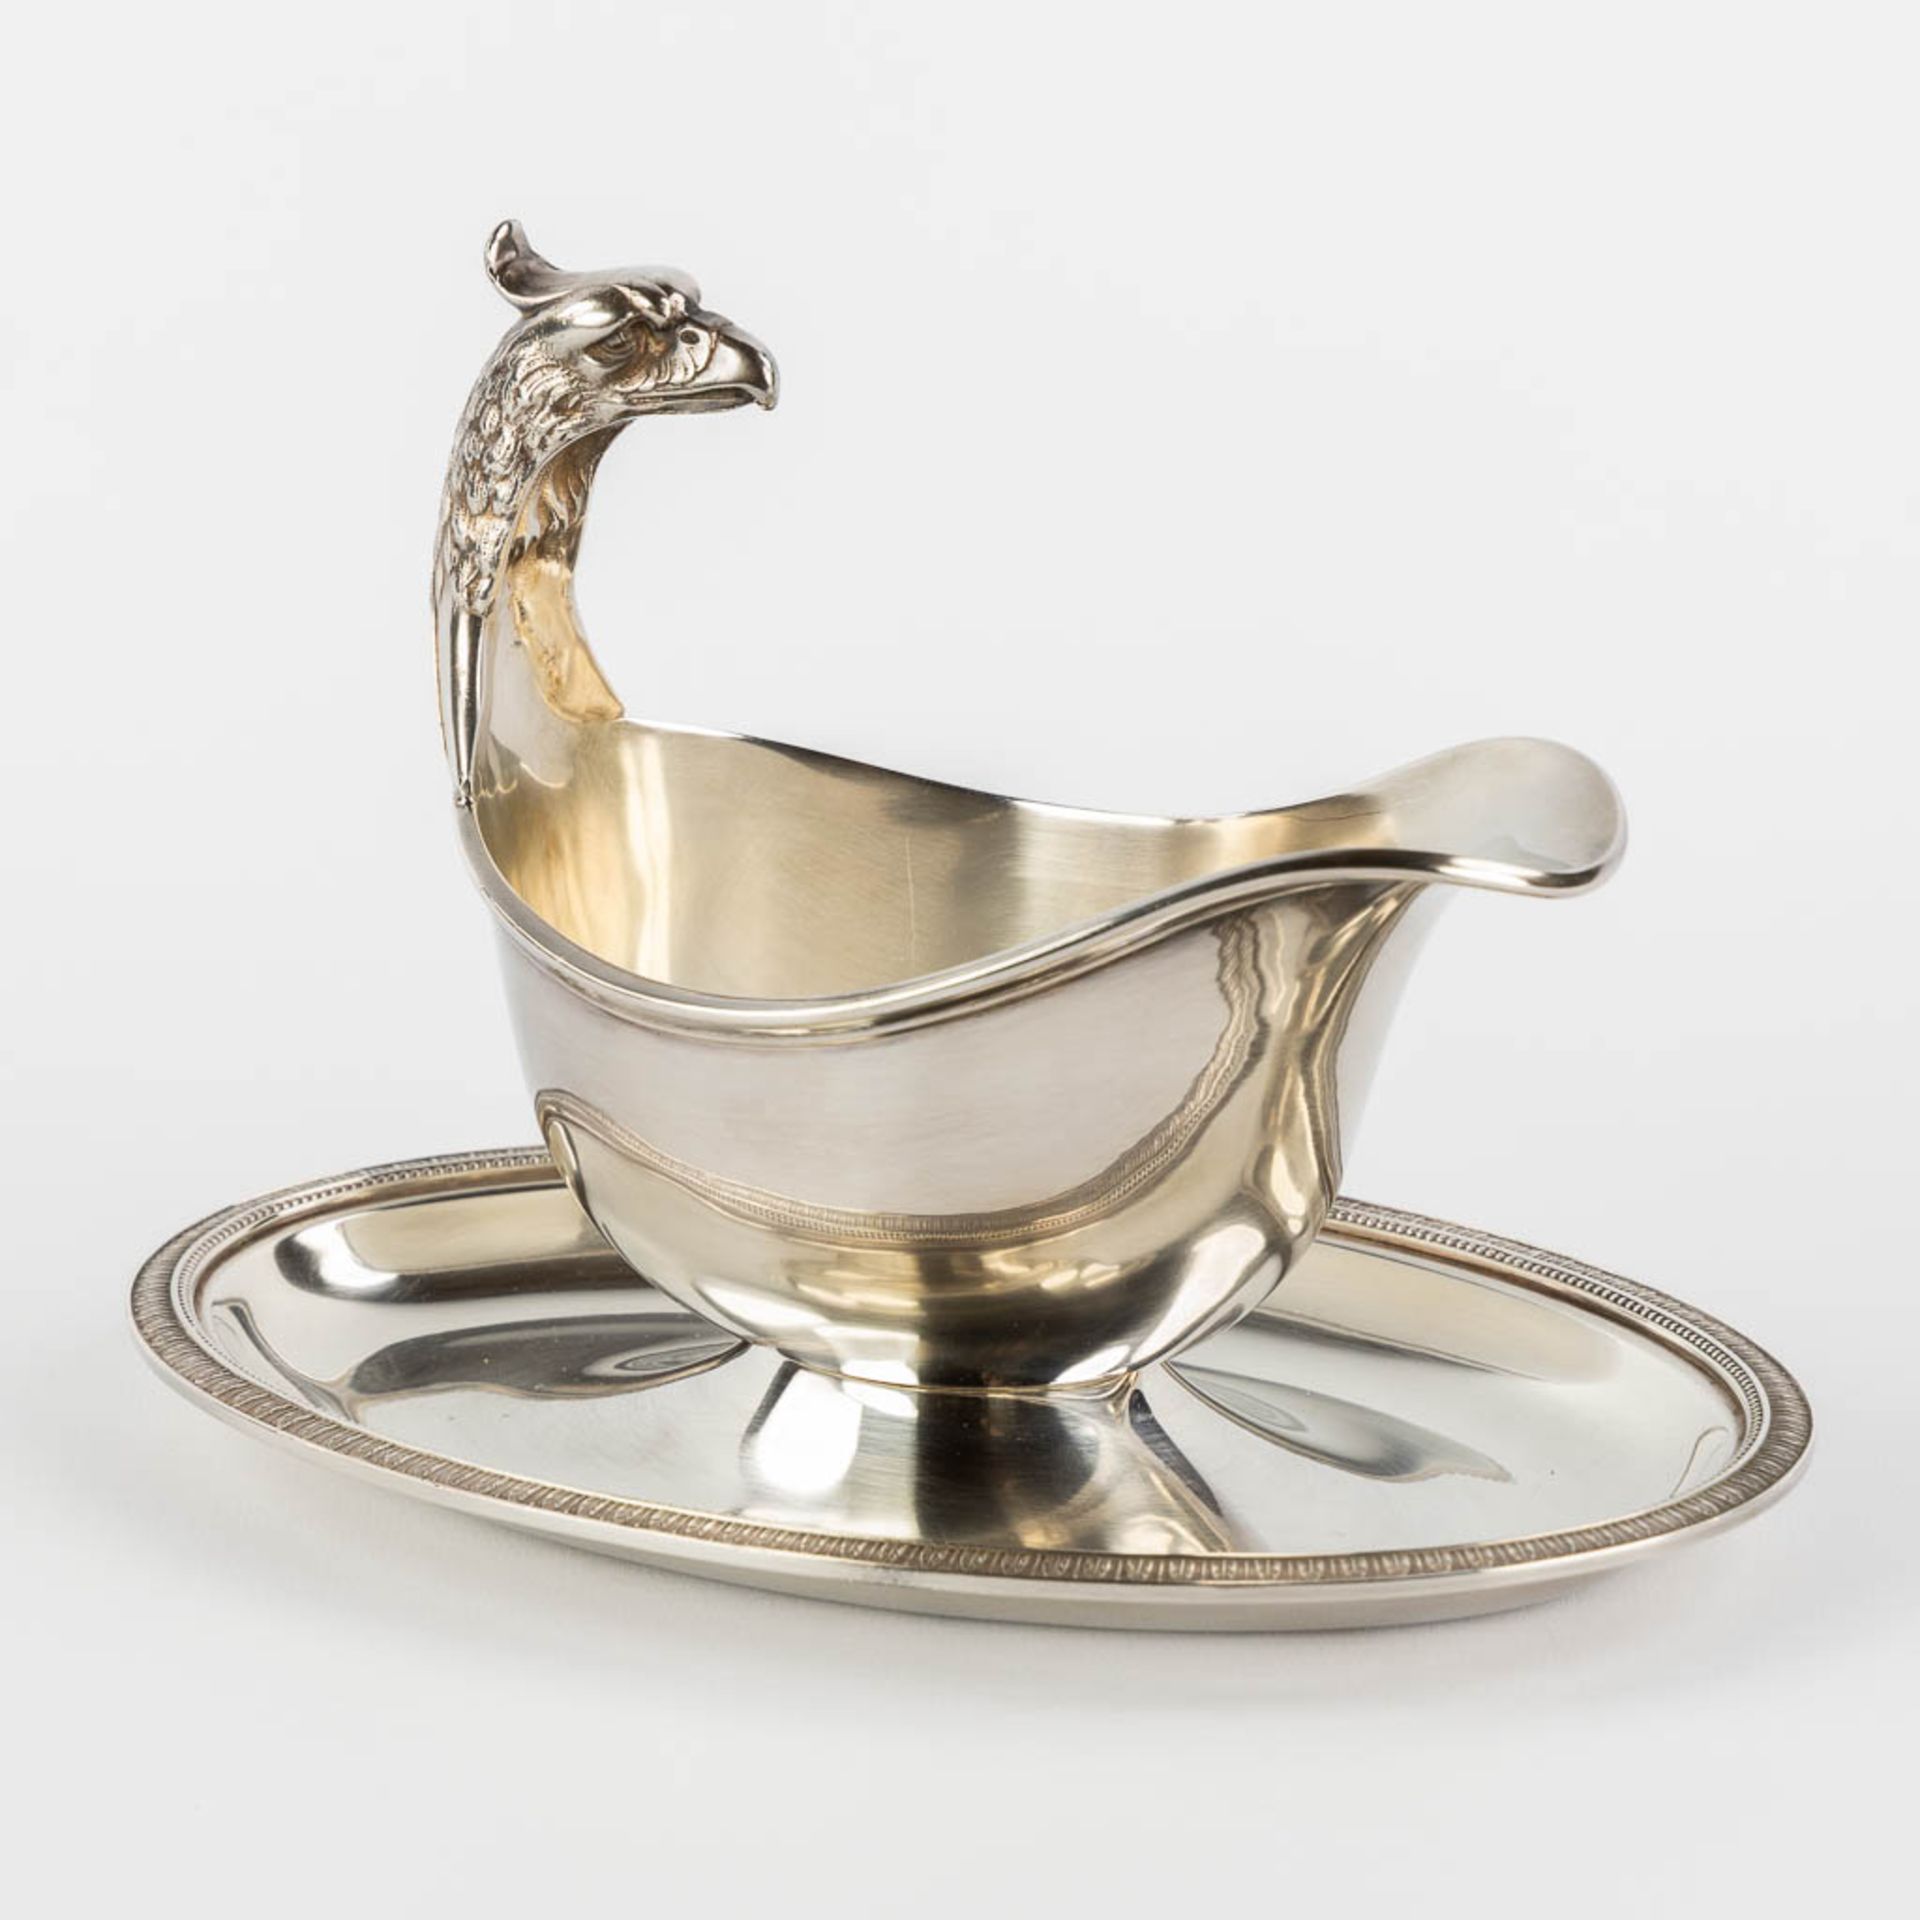 Christofle France 'Malmaison', a saucer with an eagle head. Silver-plated metal. (L:14 x W:22,5 x H: